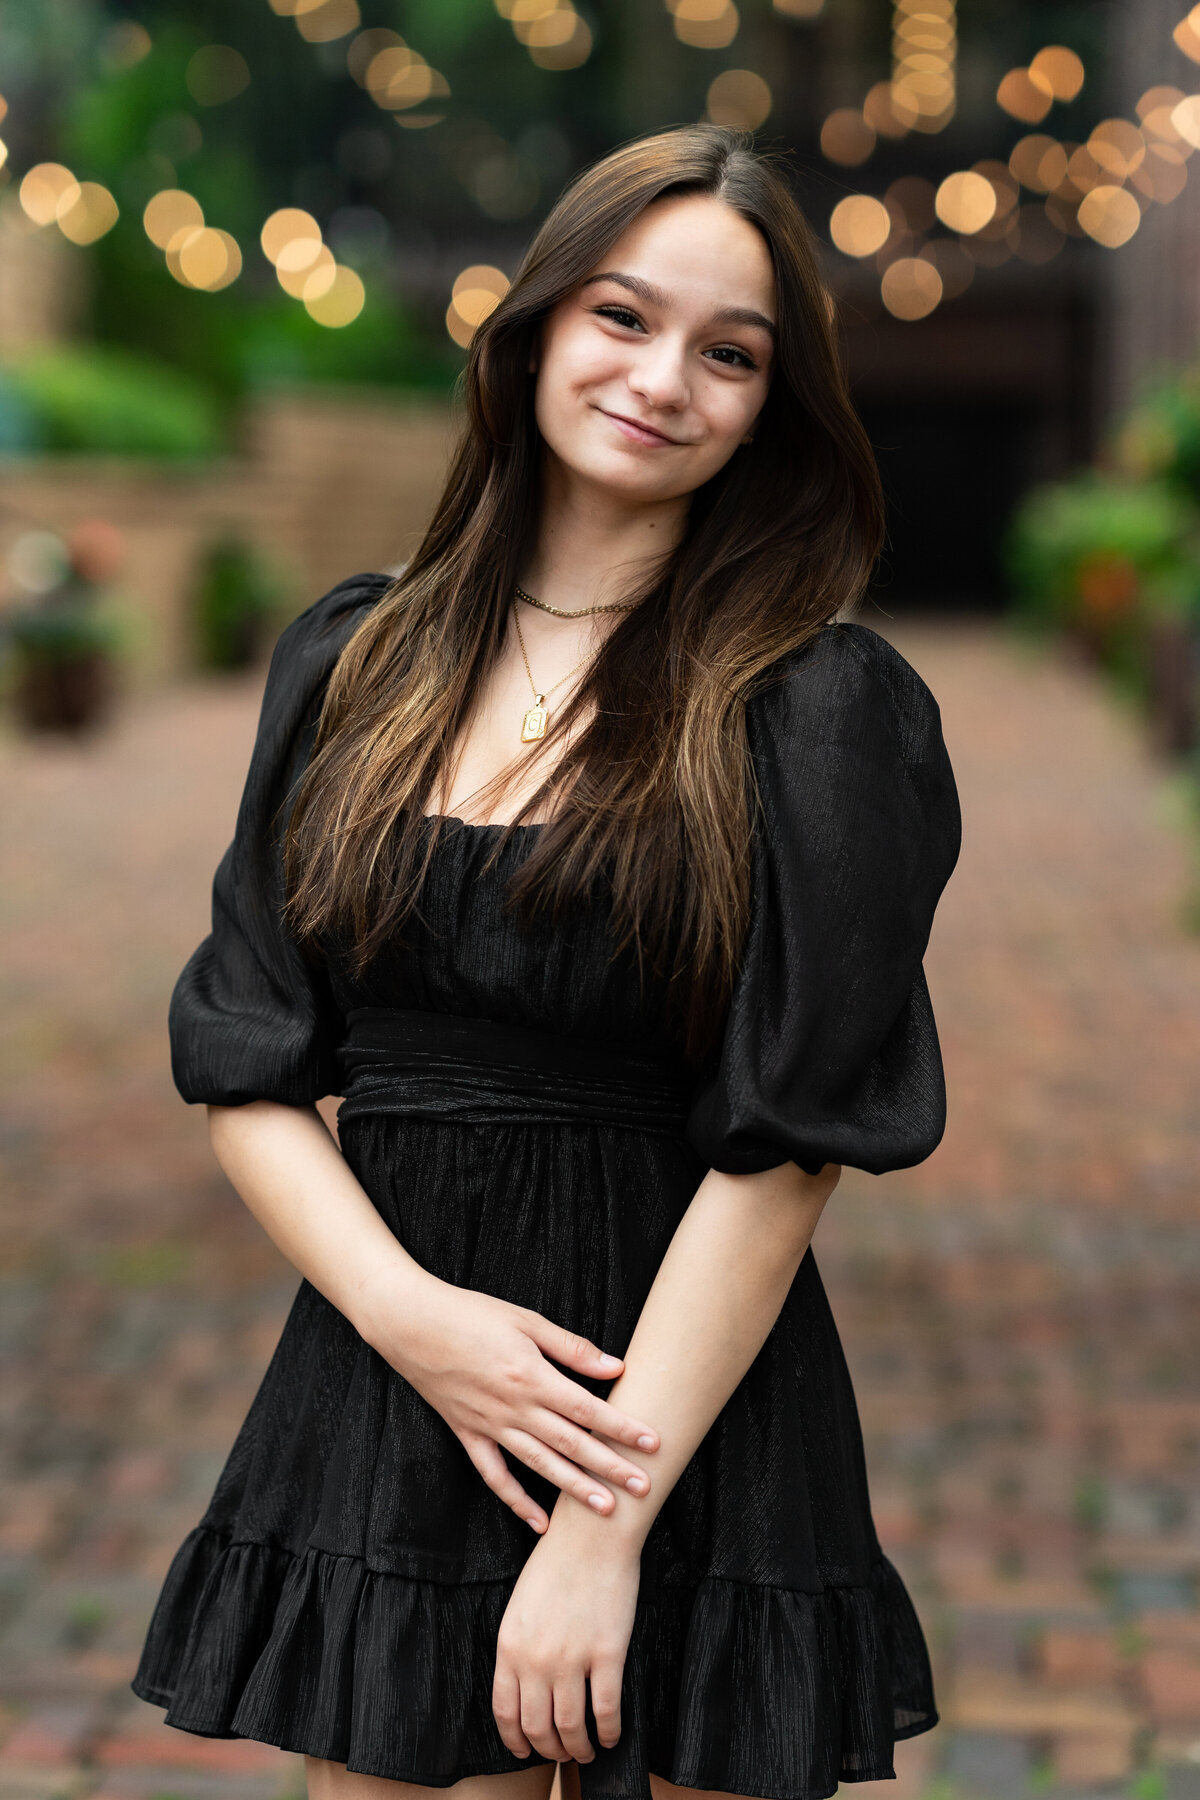 Senior girl dressed in black dress stands on cobblestone in Minneapolis, Minnesota.